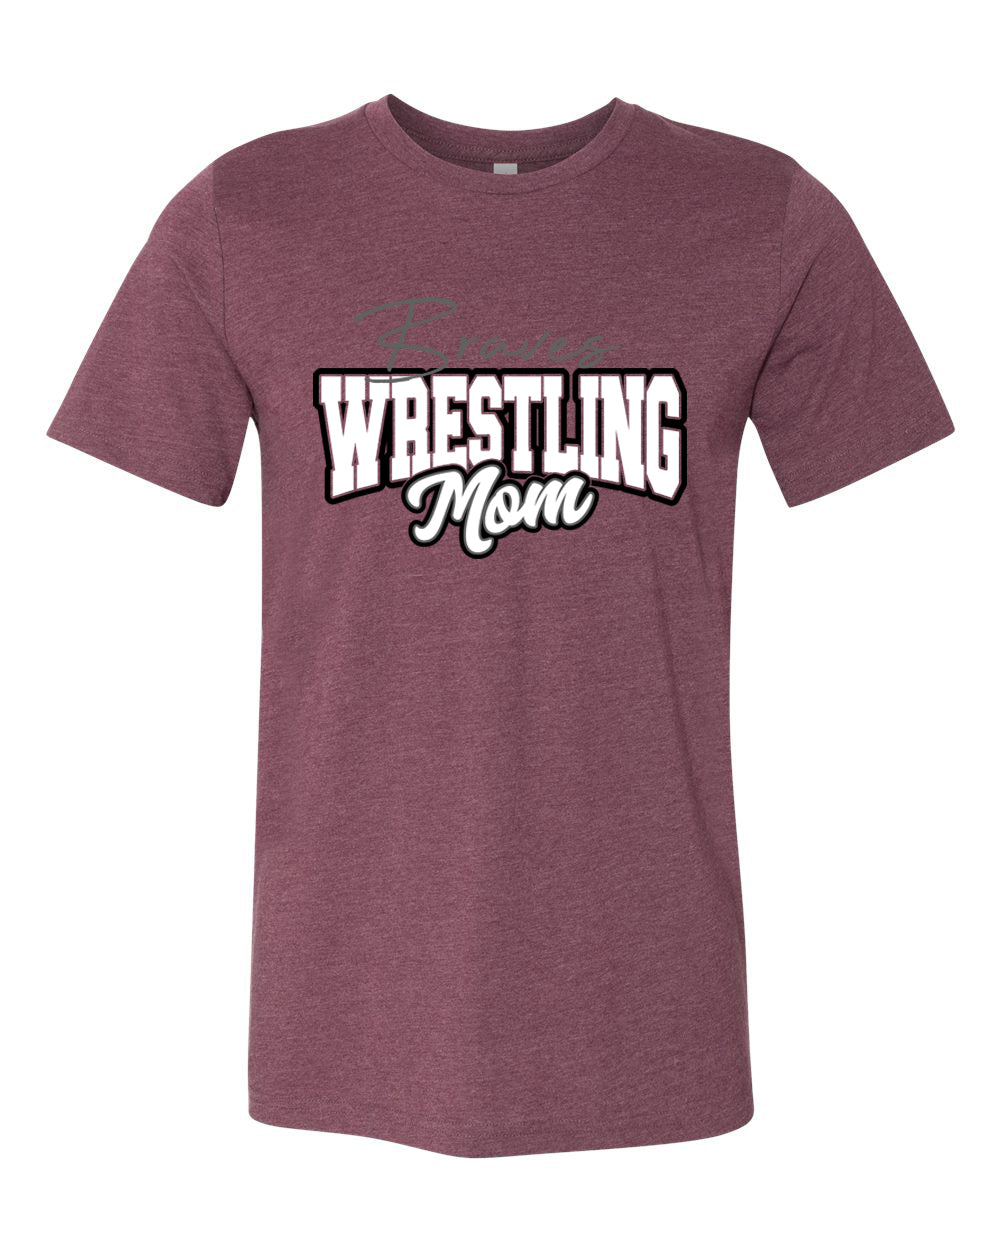 Newton wrestling design 5 T-Shirt